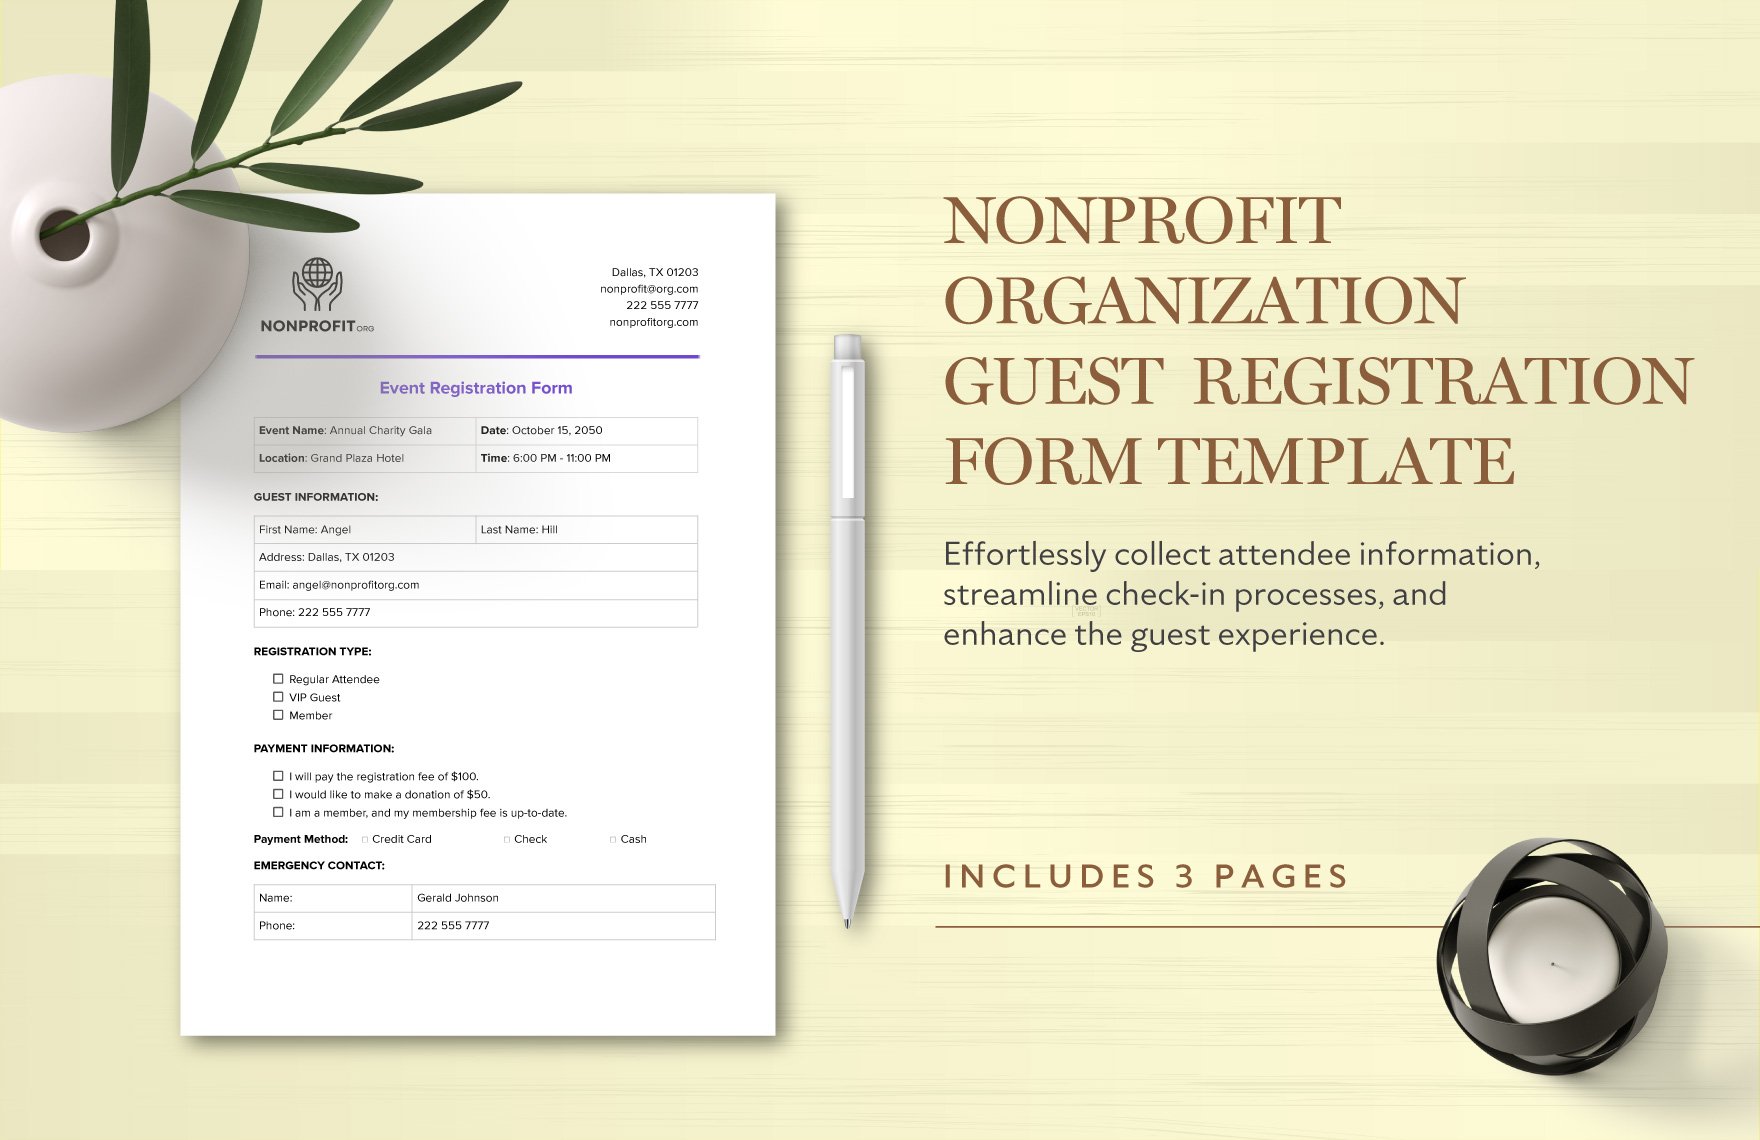 Nonprofit Organization Guest Registration Form Template